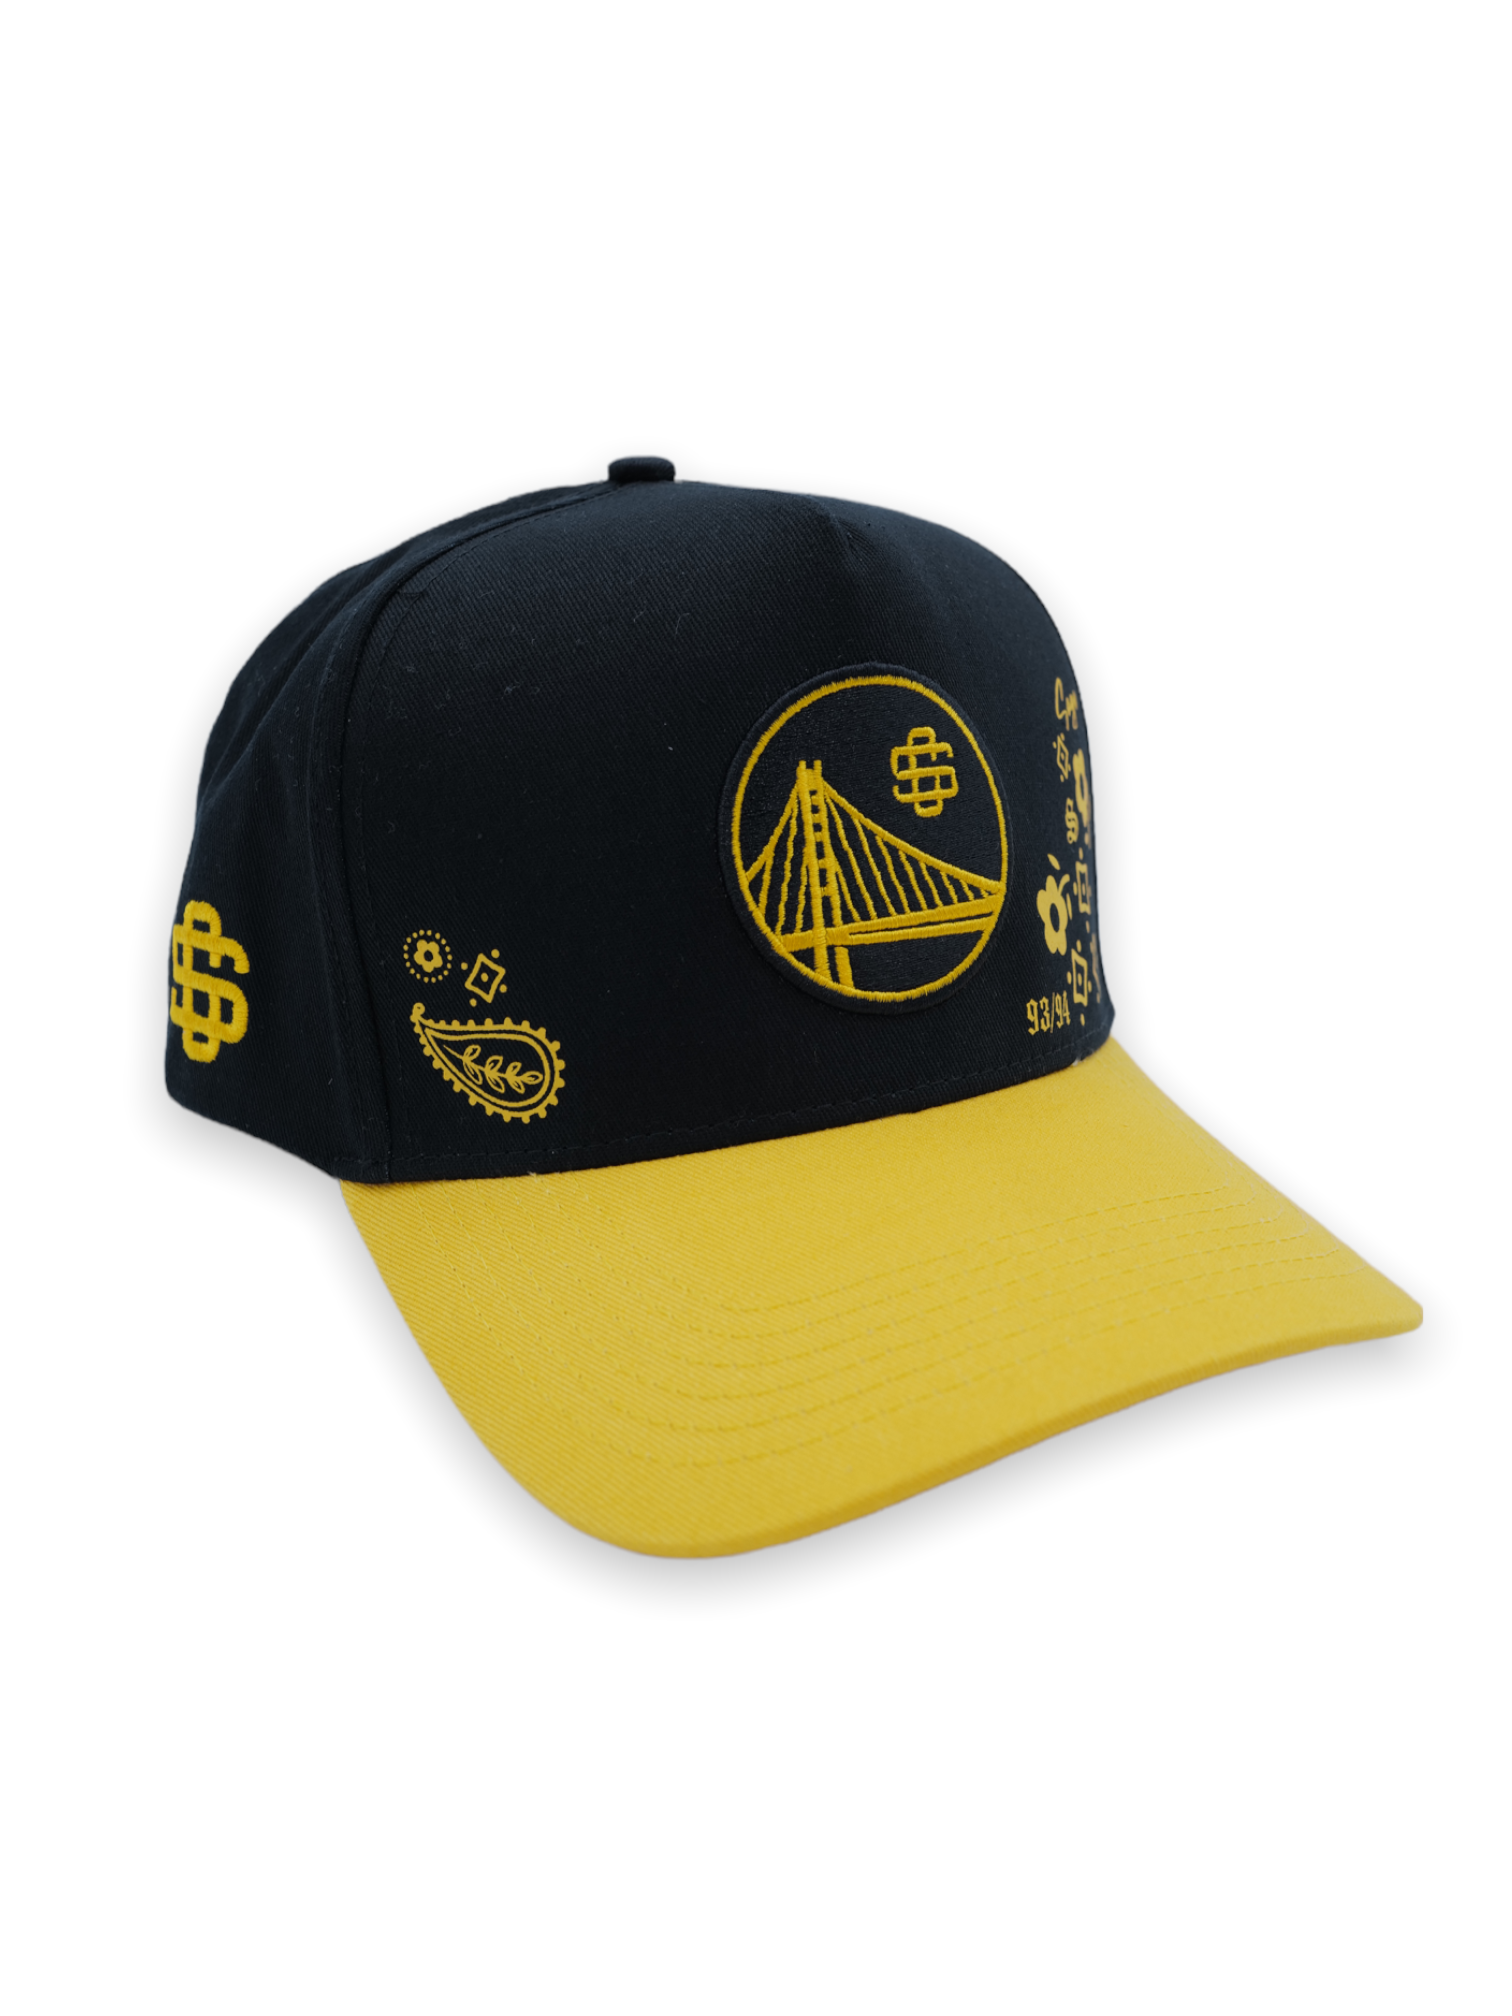 Warriors Championship Hat